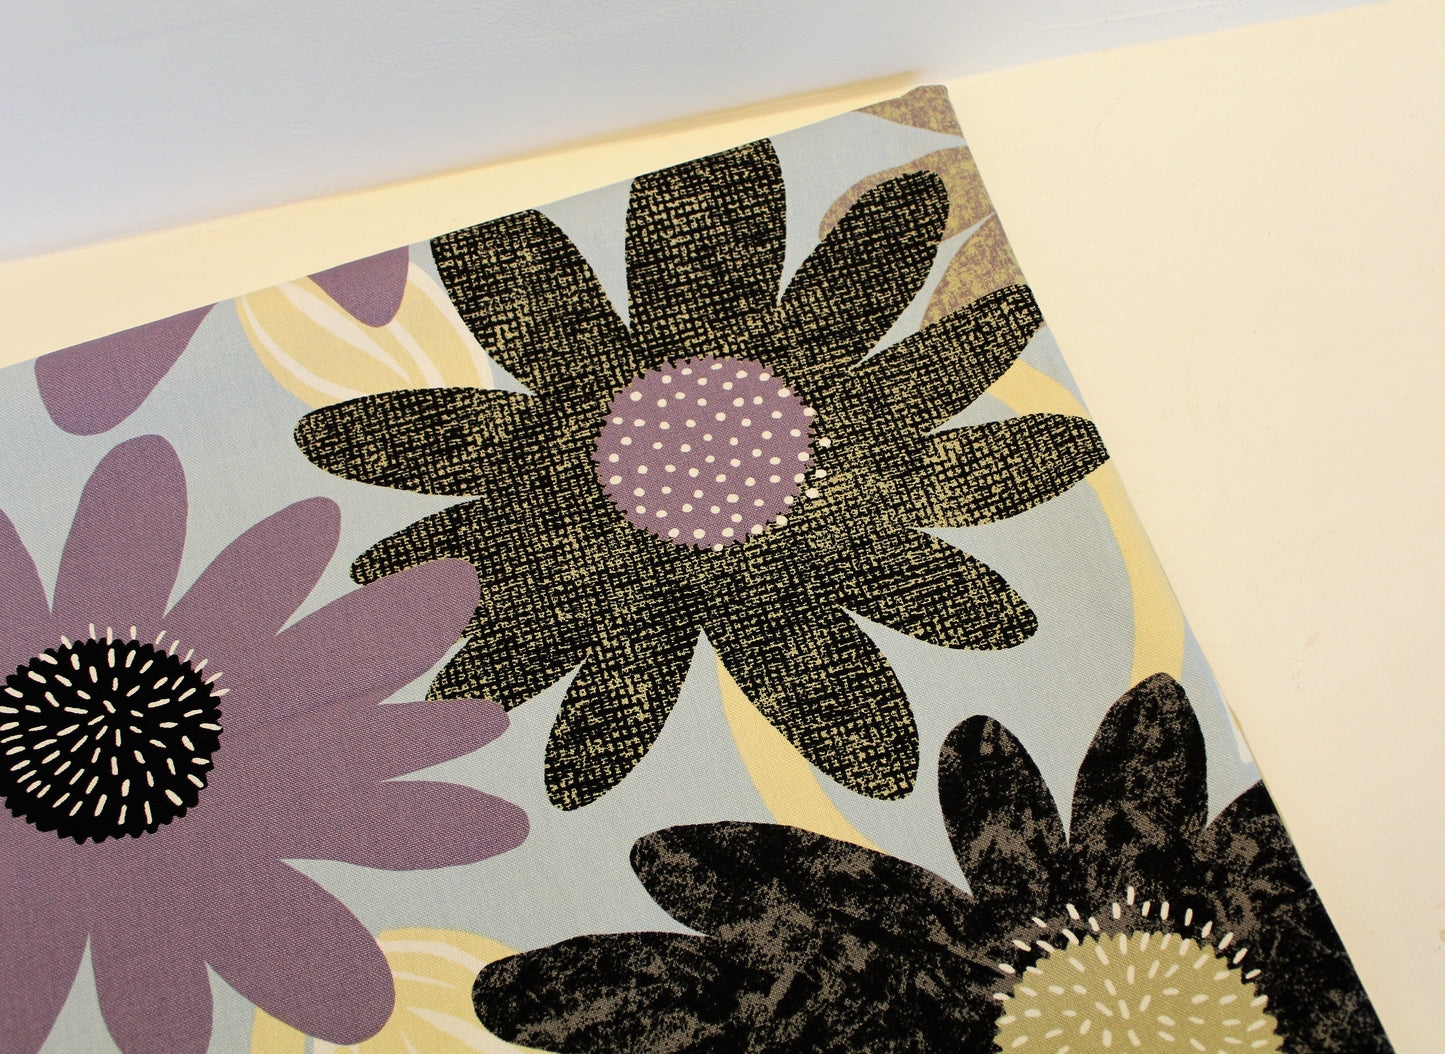 Anemone Flower - Cushion cover - 53cm x 43cm